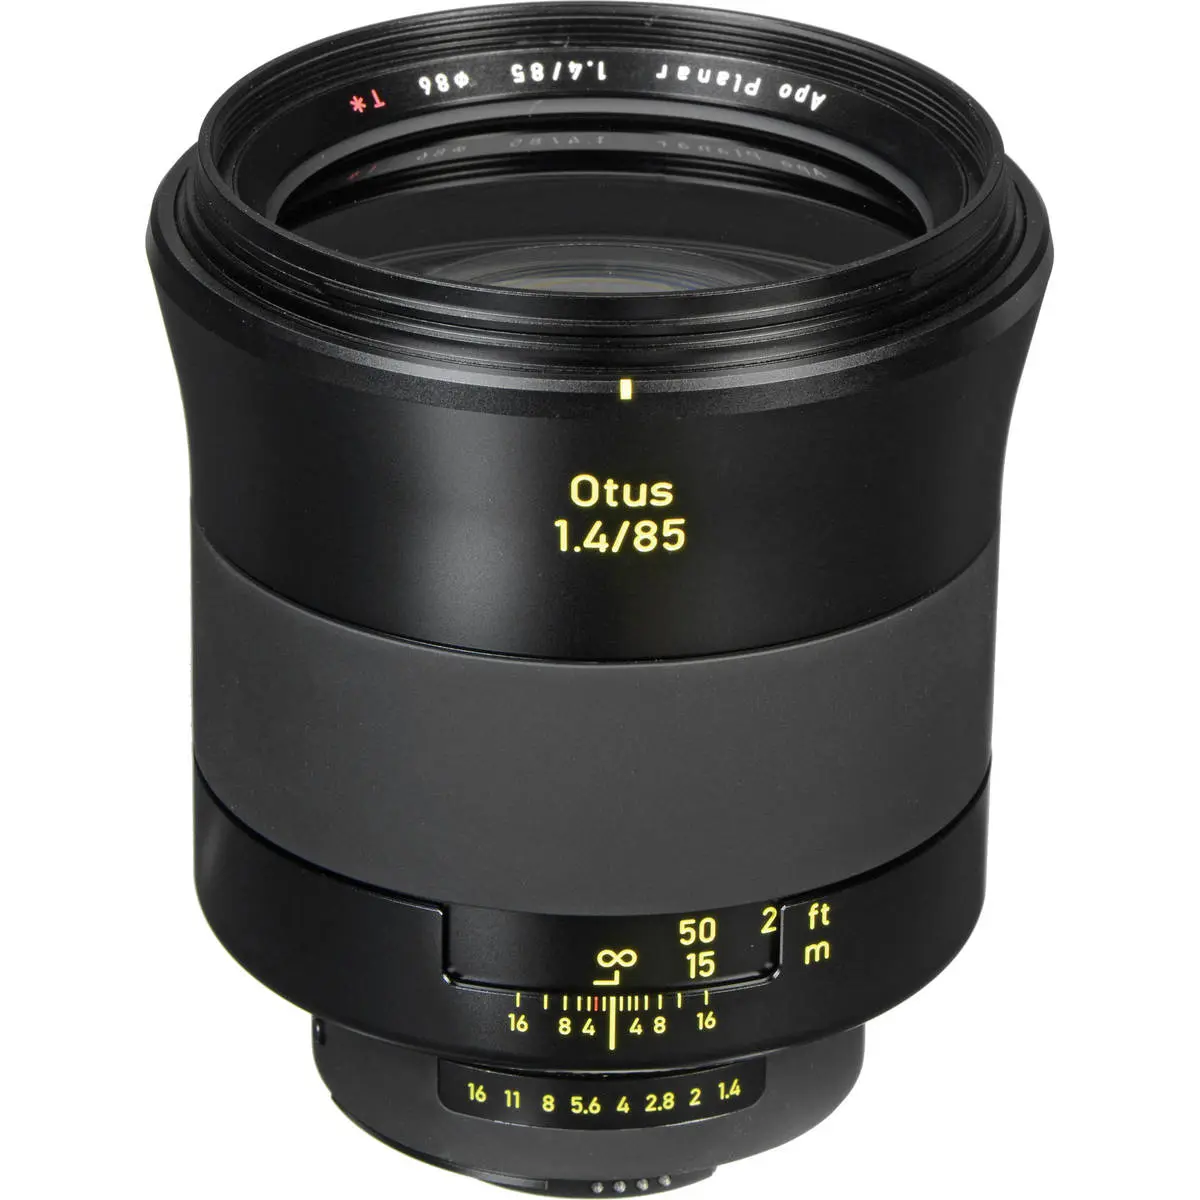 Carl Zeiss Otus Planar T* ZF.2 1.4/85 (Nikon) Lens